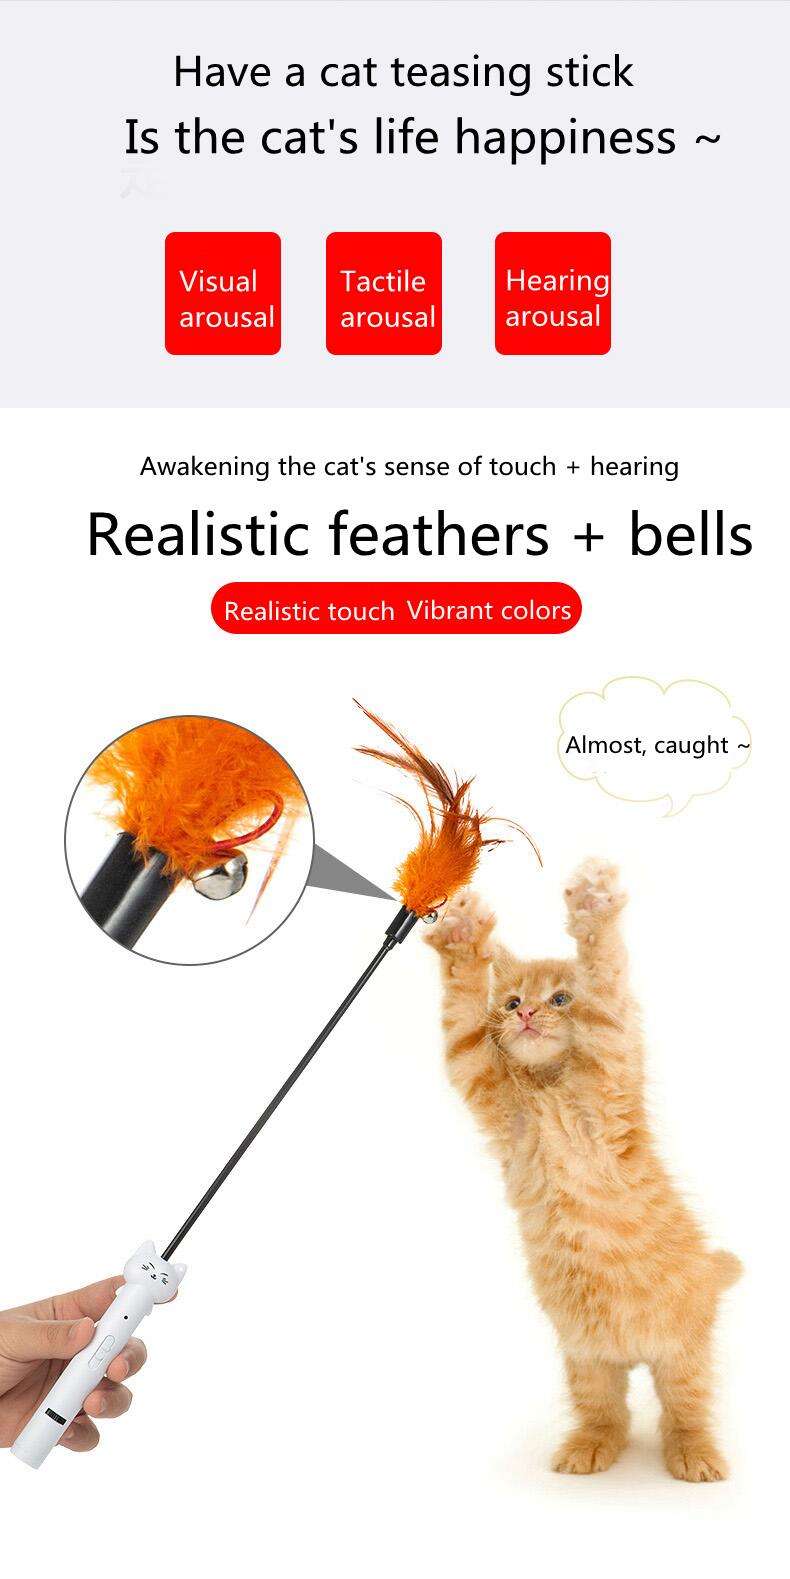 USB Charging Laser Teasing Cat Stick Infrared Laser Light Pattern Projection Cat Toys Pet Supplies Teasing Cat Pen